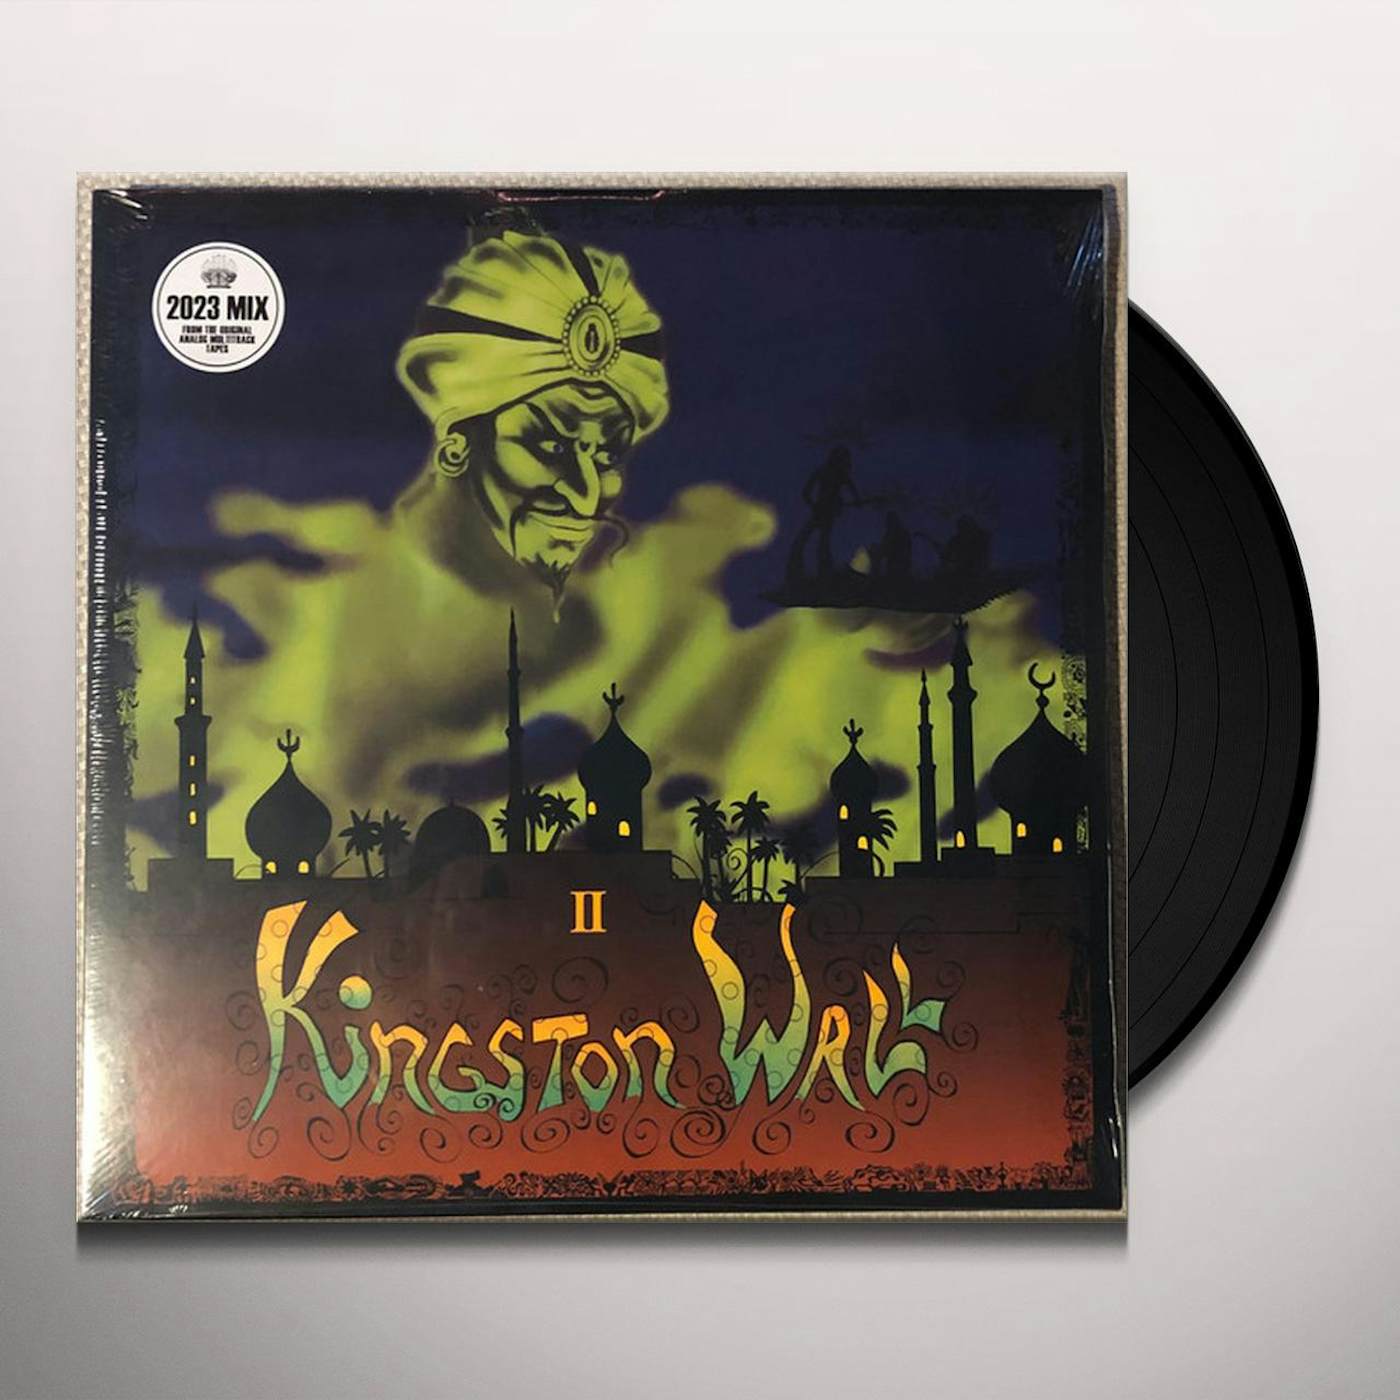 Kingston Wall II Vinyl Record